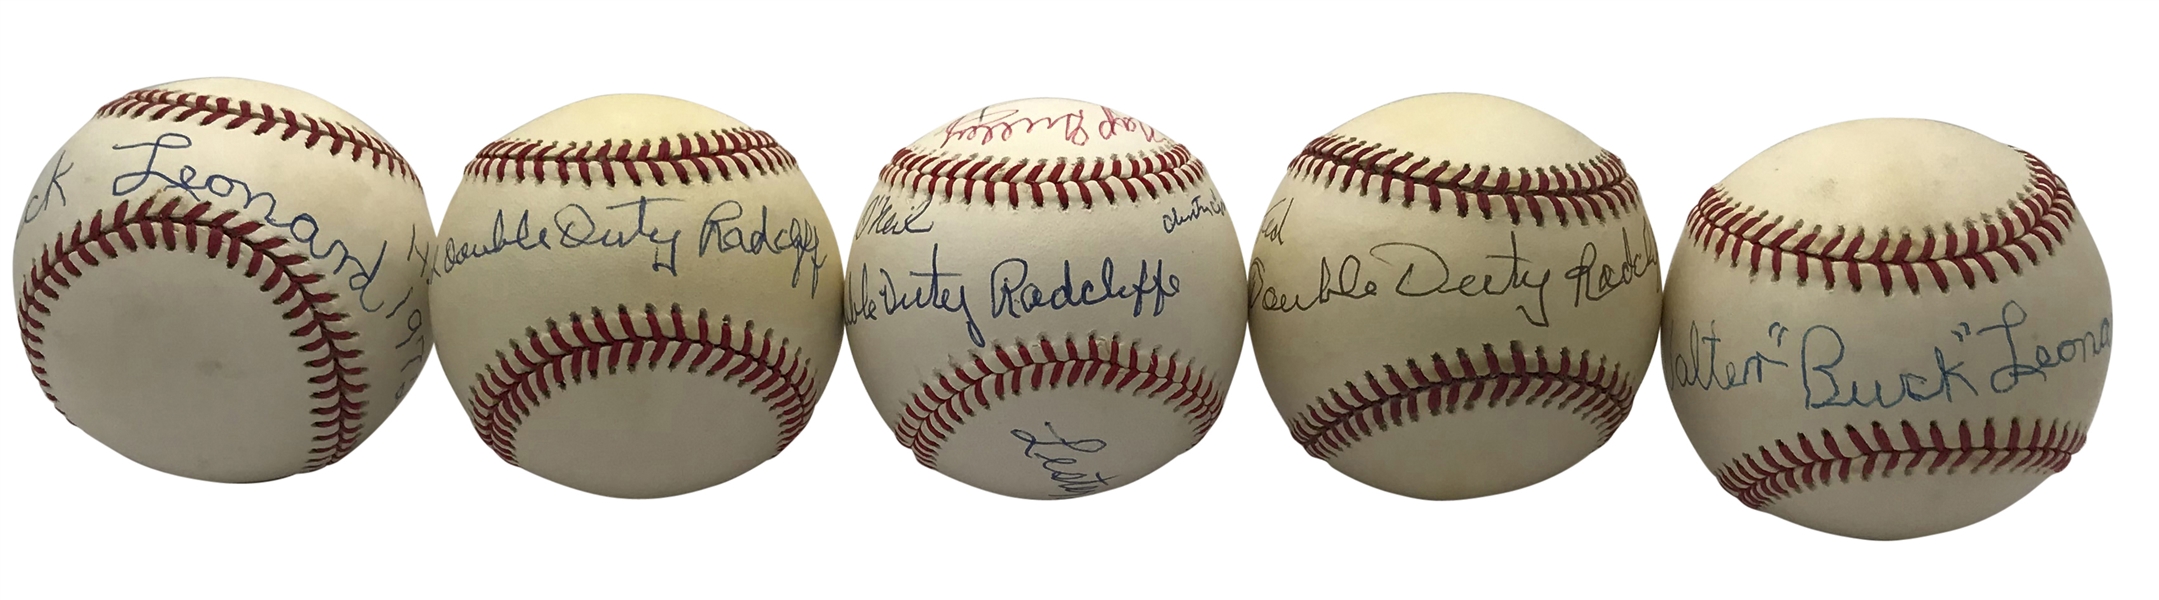 Lot of Five (5) Negro League Greats Signed Baseballs w/ Leonard, Radcliffe & Others (Beckett/BAS Guaranteed)